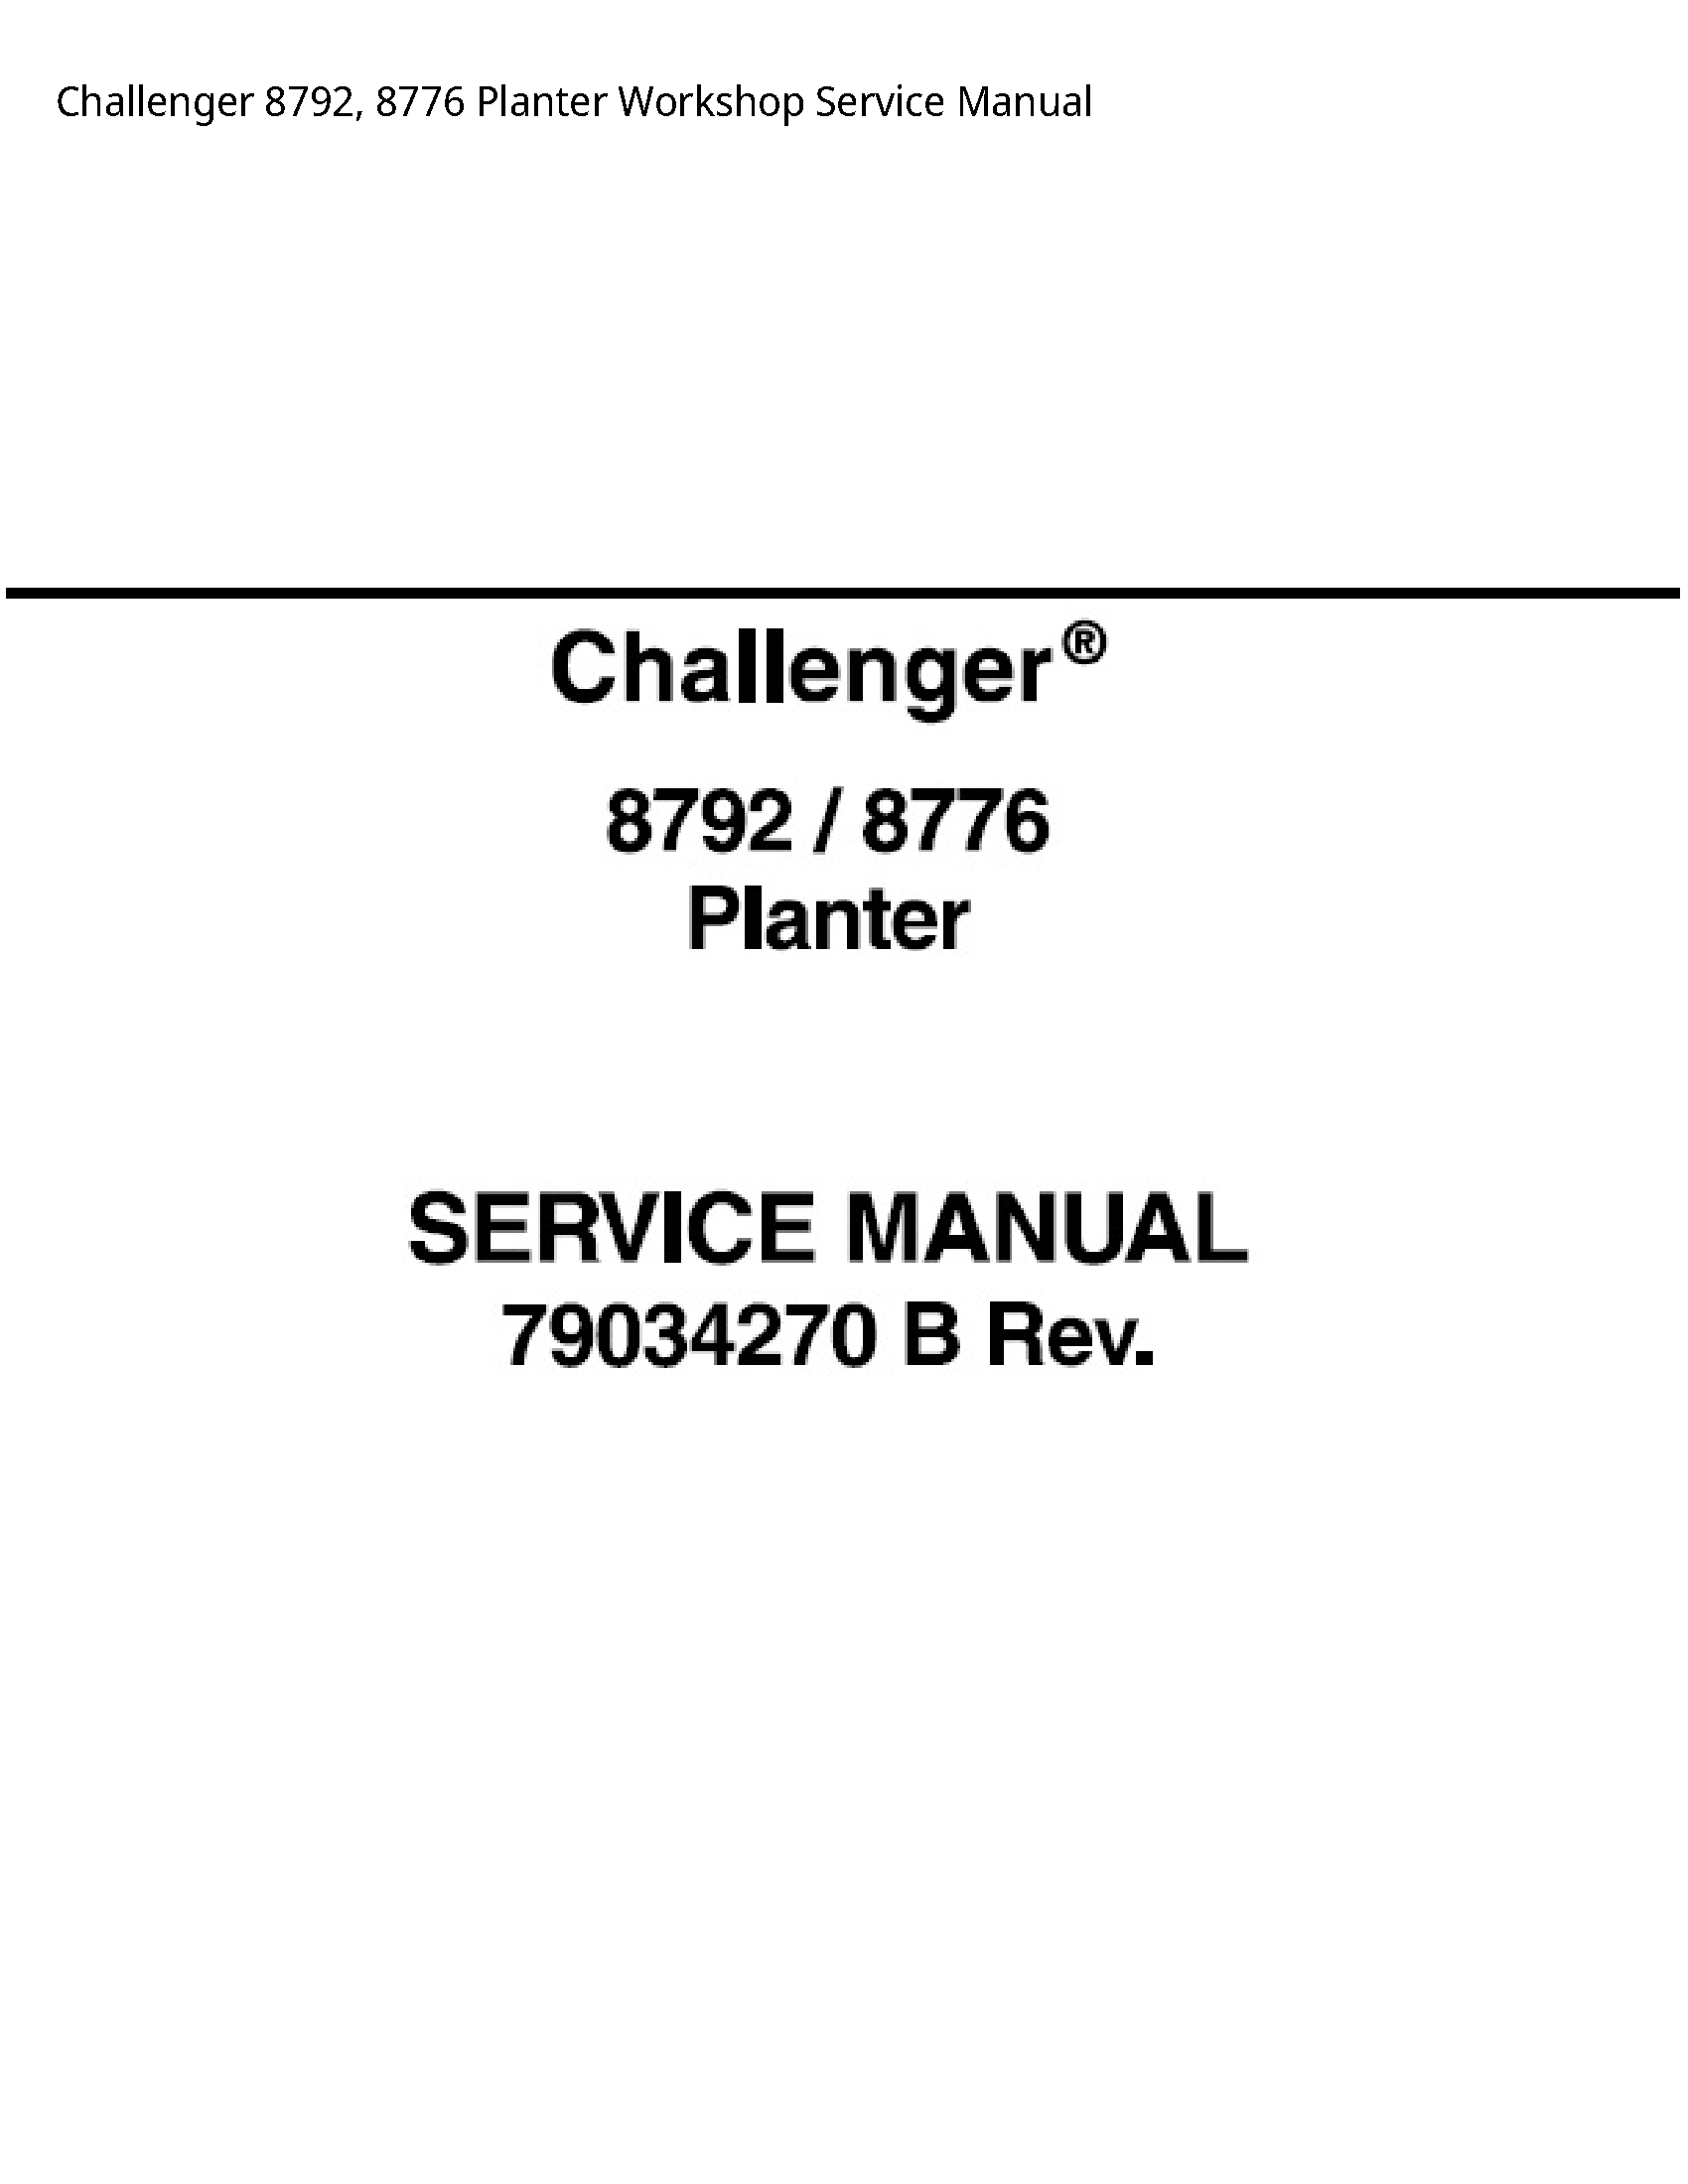 Challenger 8792 Planter Service manual